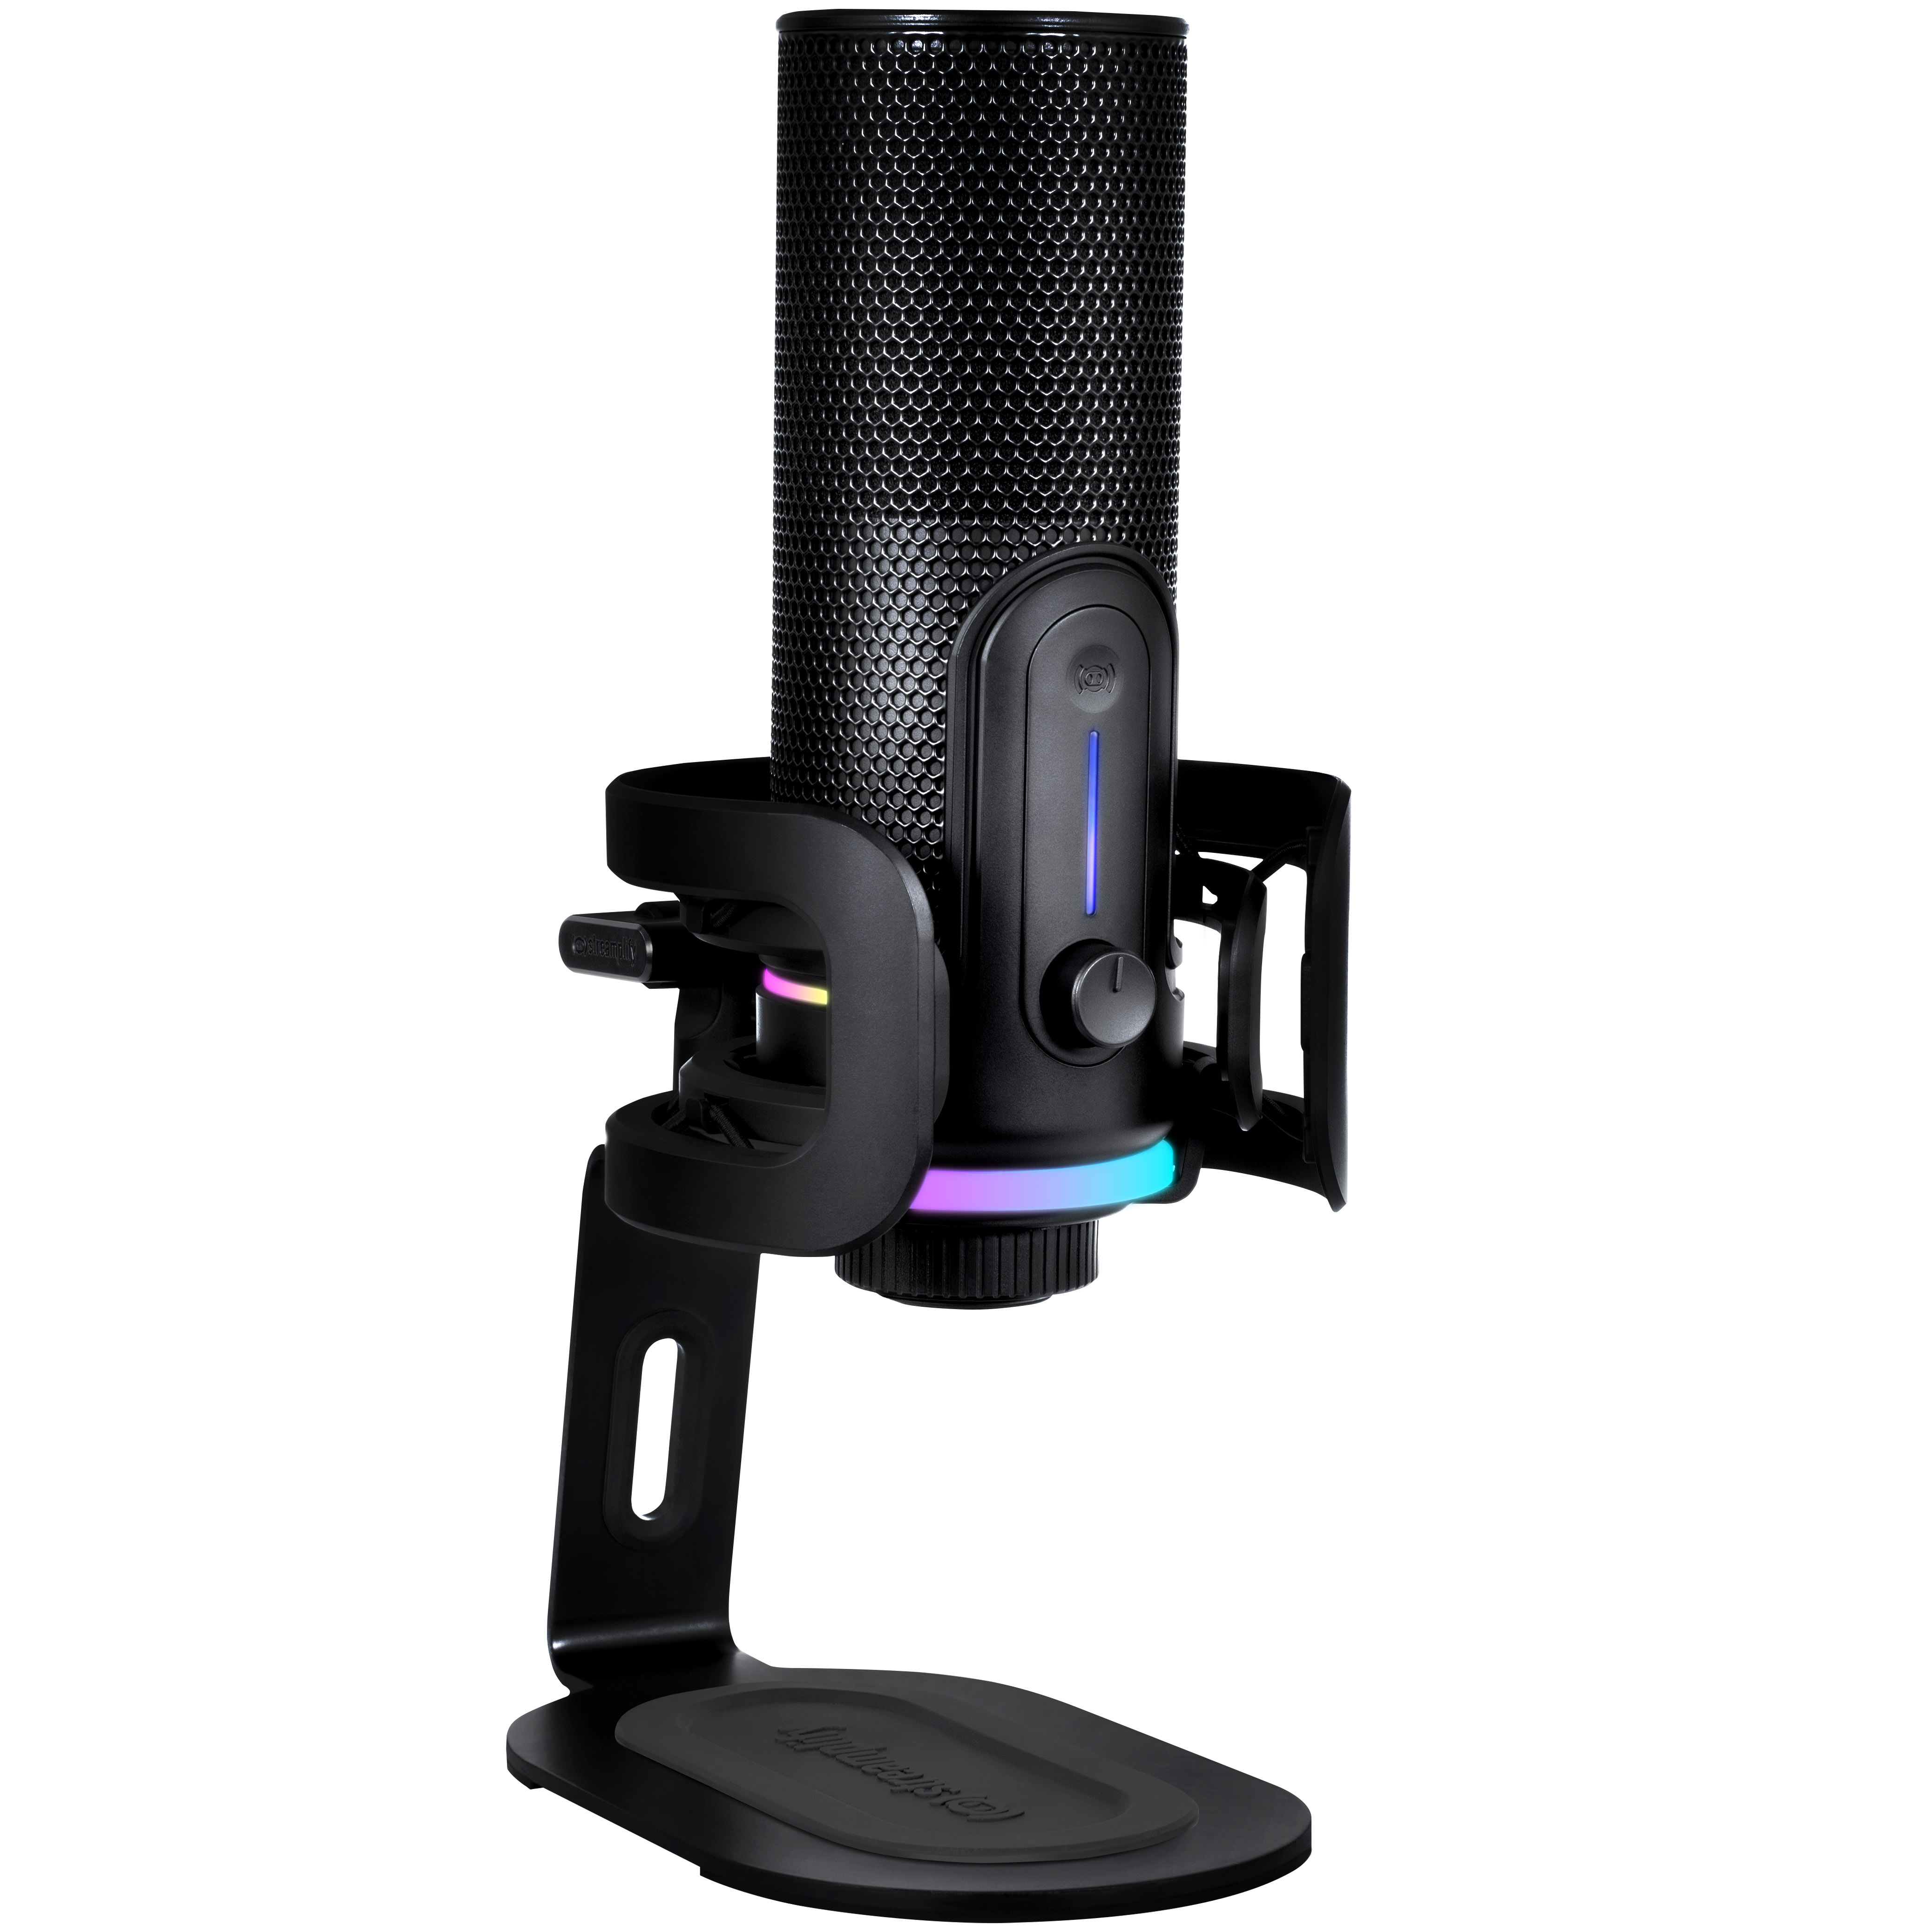 Streamplify MIC PRO USB RGB Microphone with Anti-Vibration Mount 